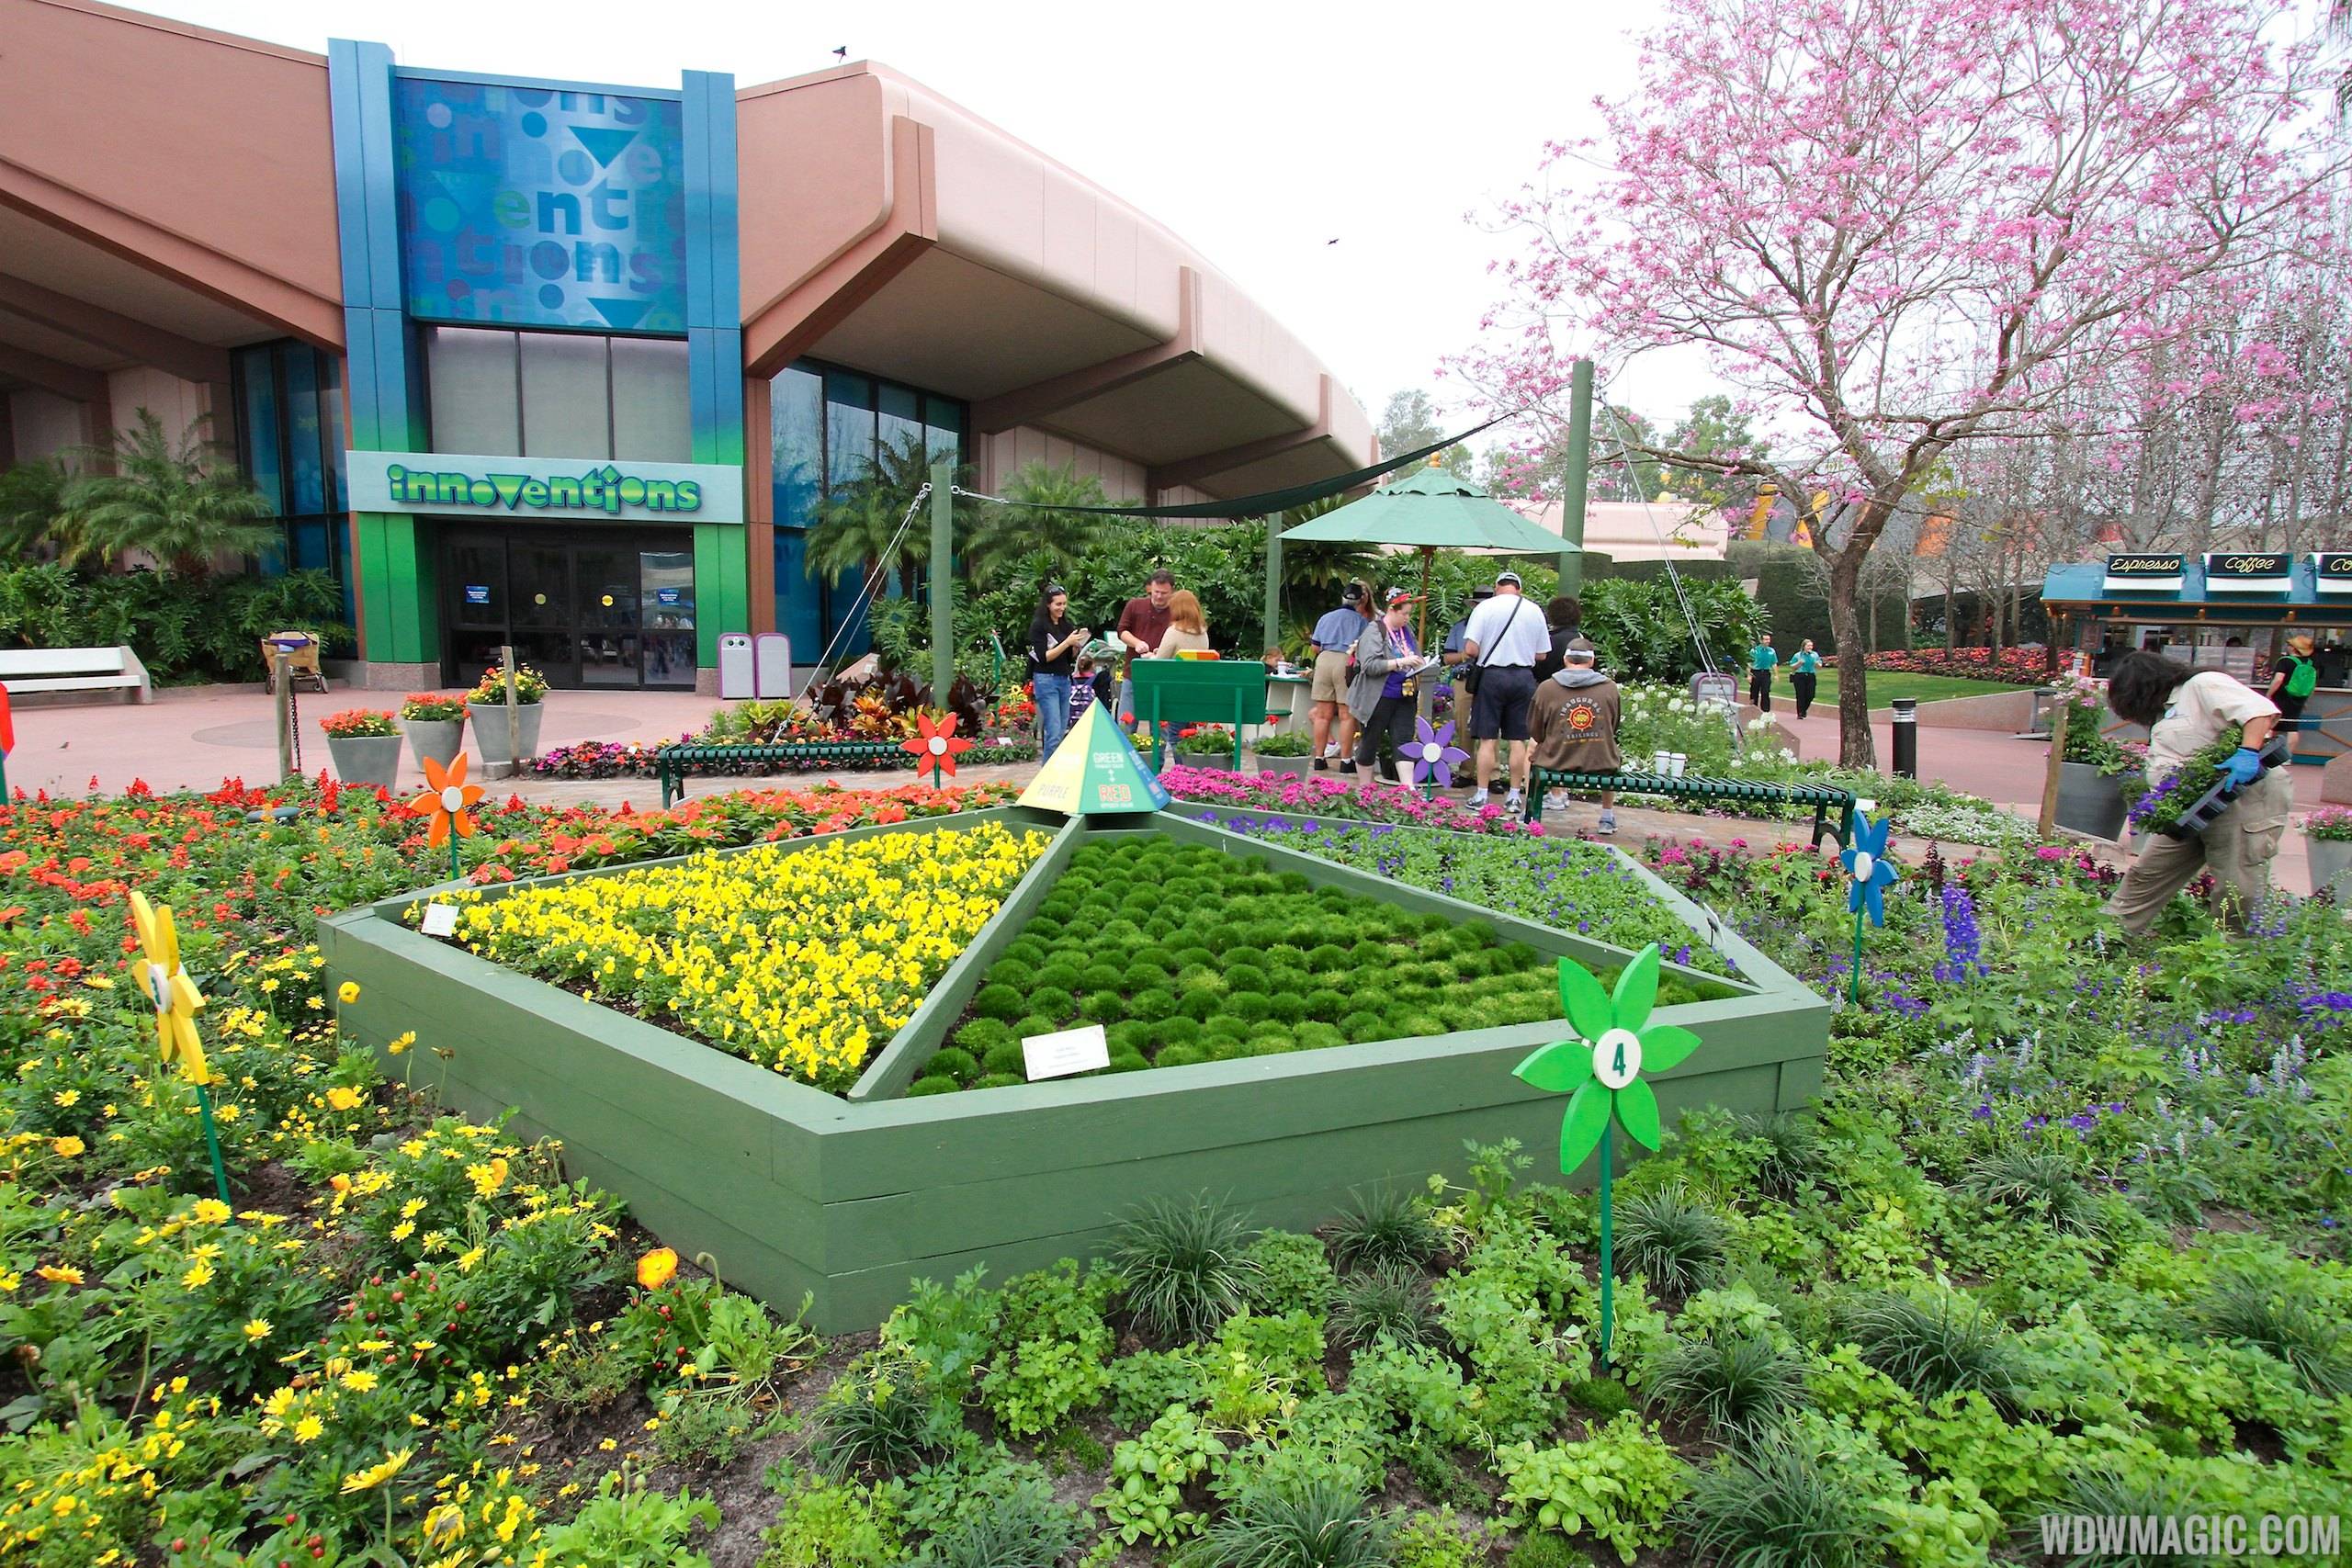 2014 Epcot Flower and Garden Festival - Gardener's Palette exhibit